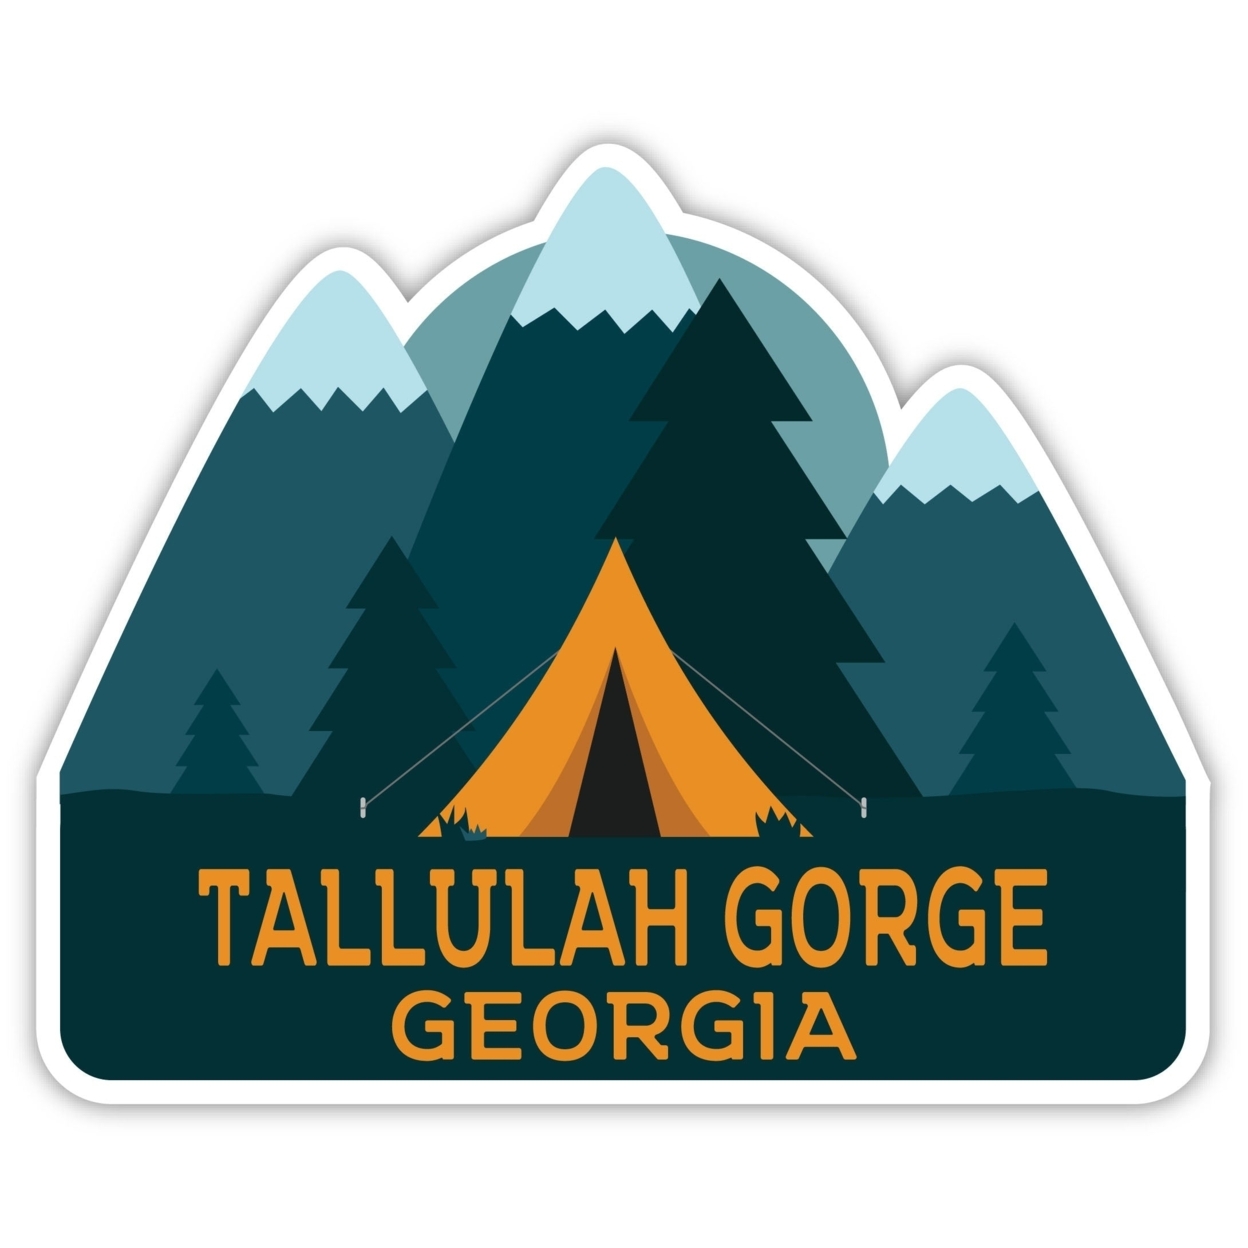 Tallulah Gorge Georgia Souvenir Decorative Stickers (Choose Theme And Size) - Single Unit, 2-Inch, Tent